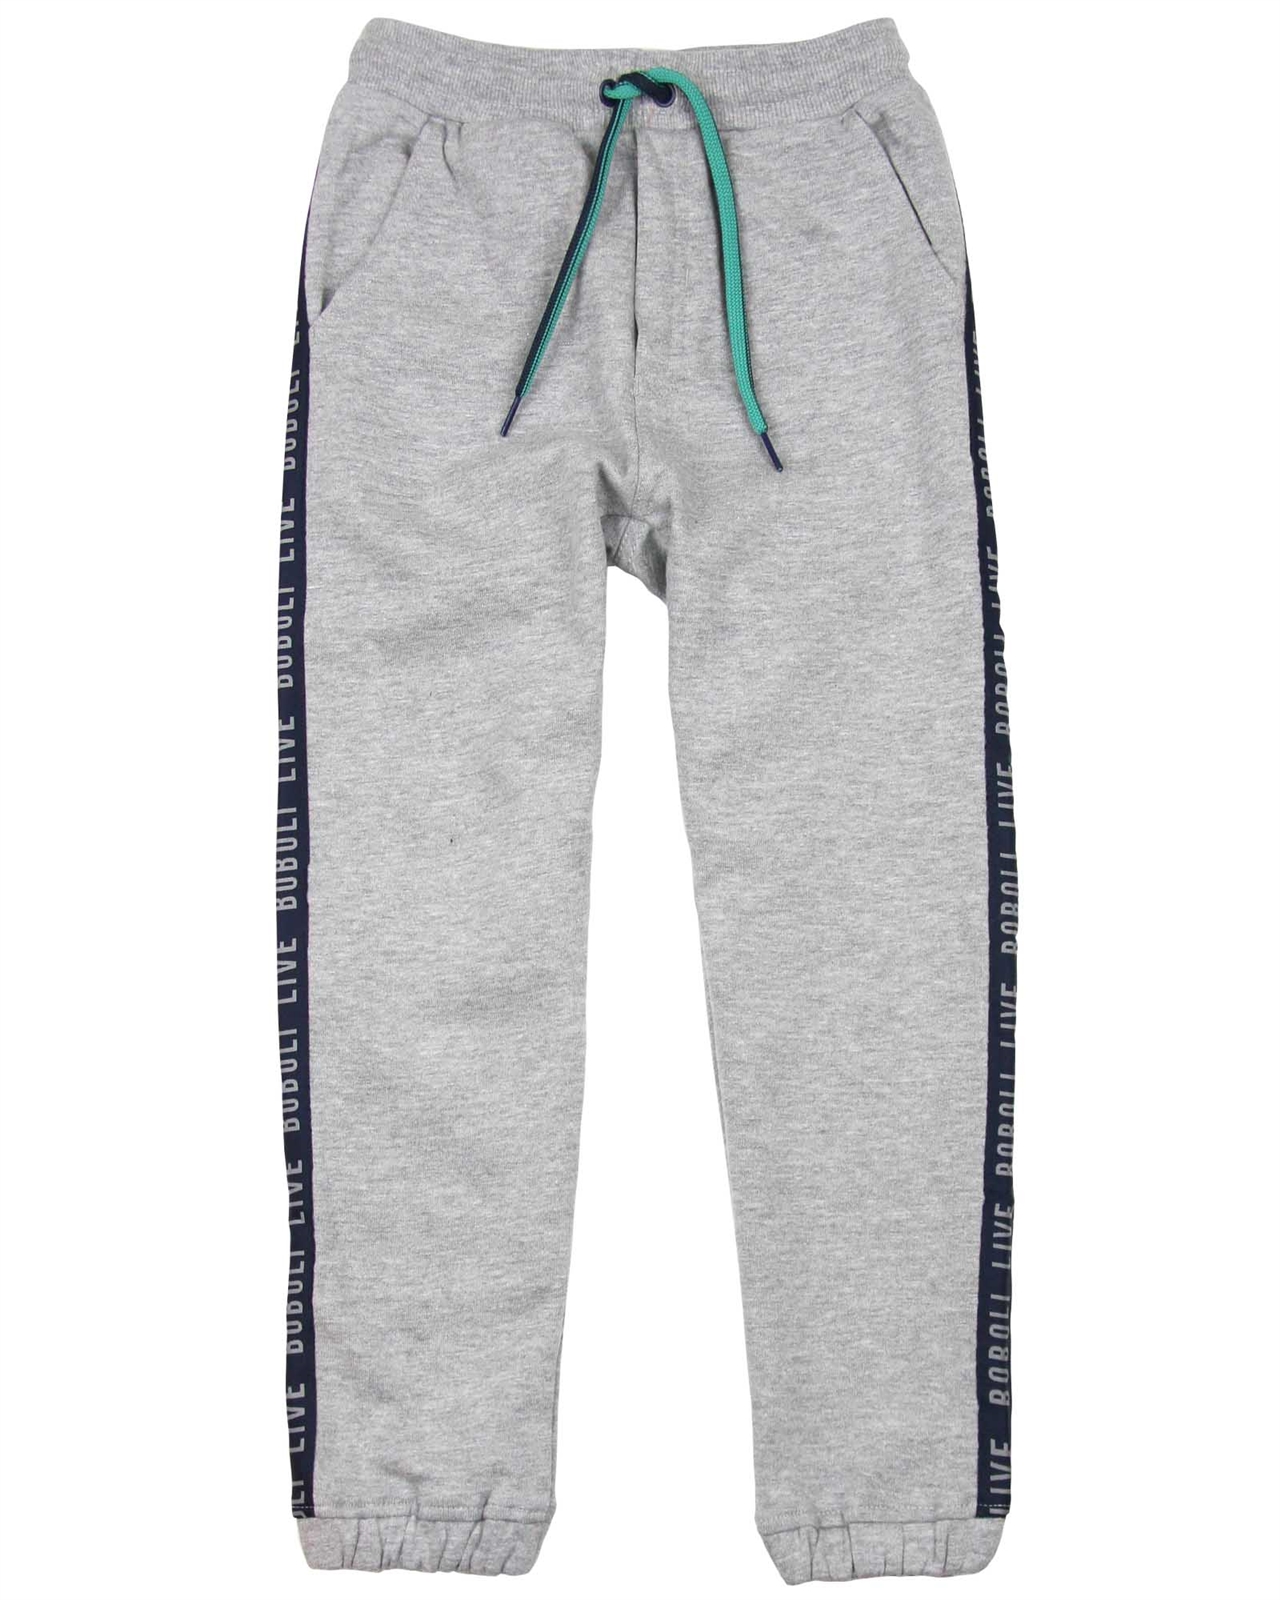 BOBOLI Boys Jogging Pants with Side Stripes, Sizes 4-16 Fall/Winter ...